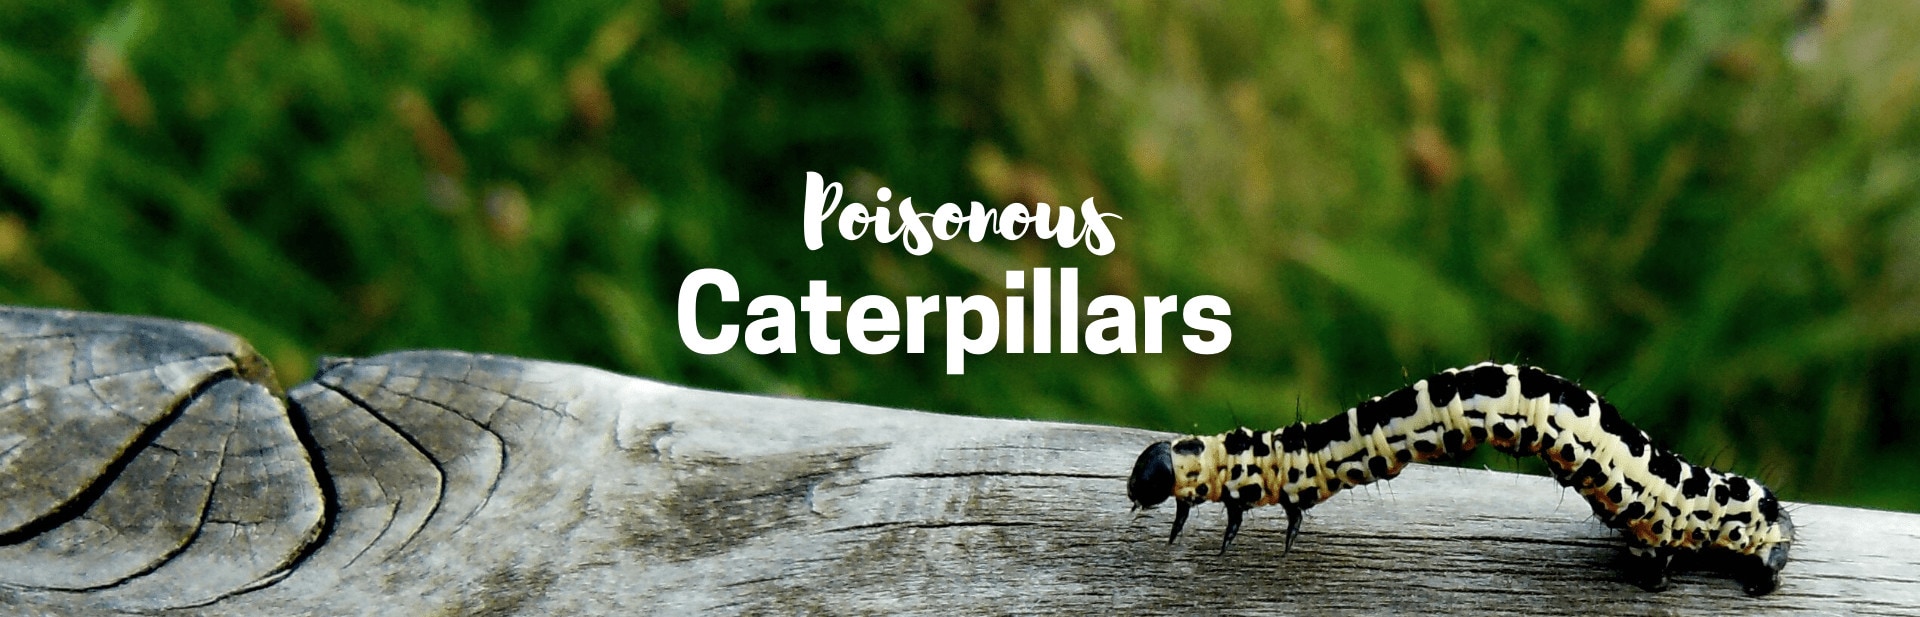 17+ Species of Poisonous Caterpillars Found Around the World